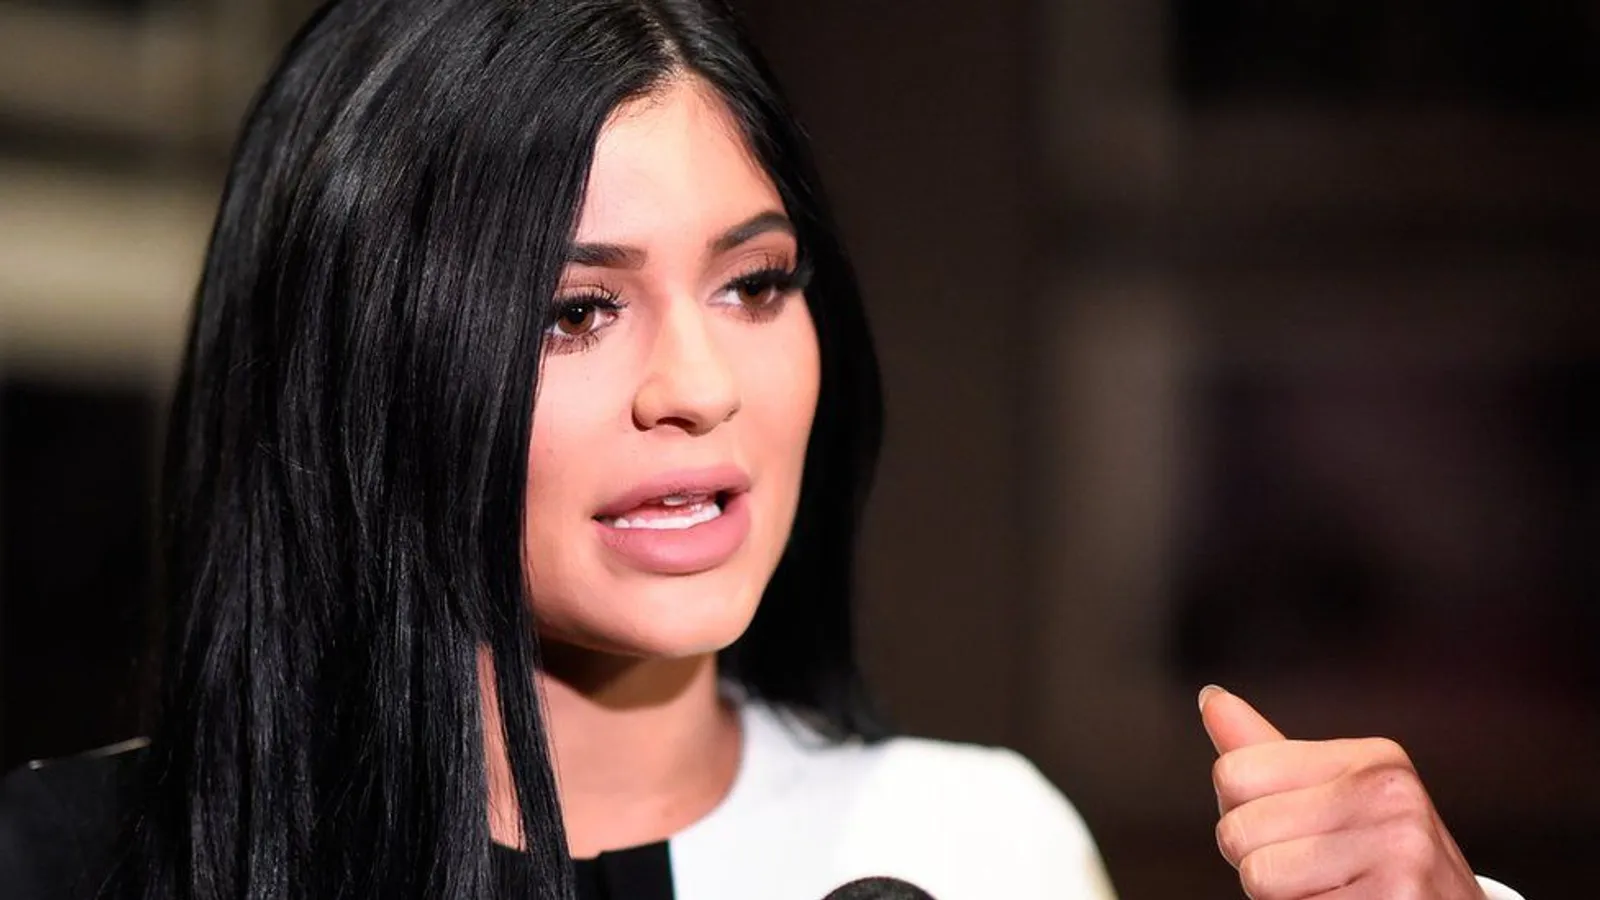 Rahasia Mendapatkan Keuntungan 10 Juta Dolar per Tahun dari Kylie Jenner